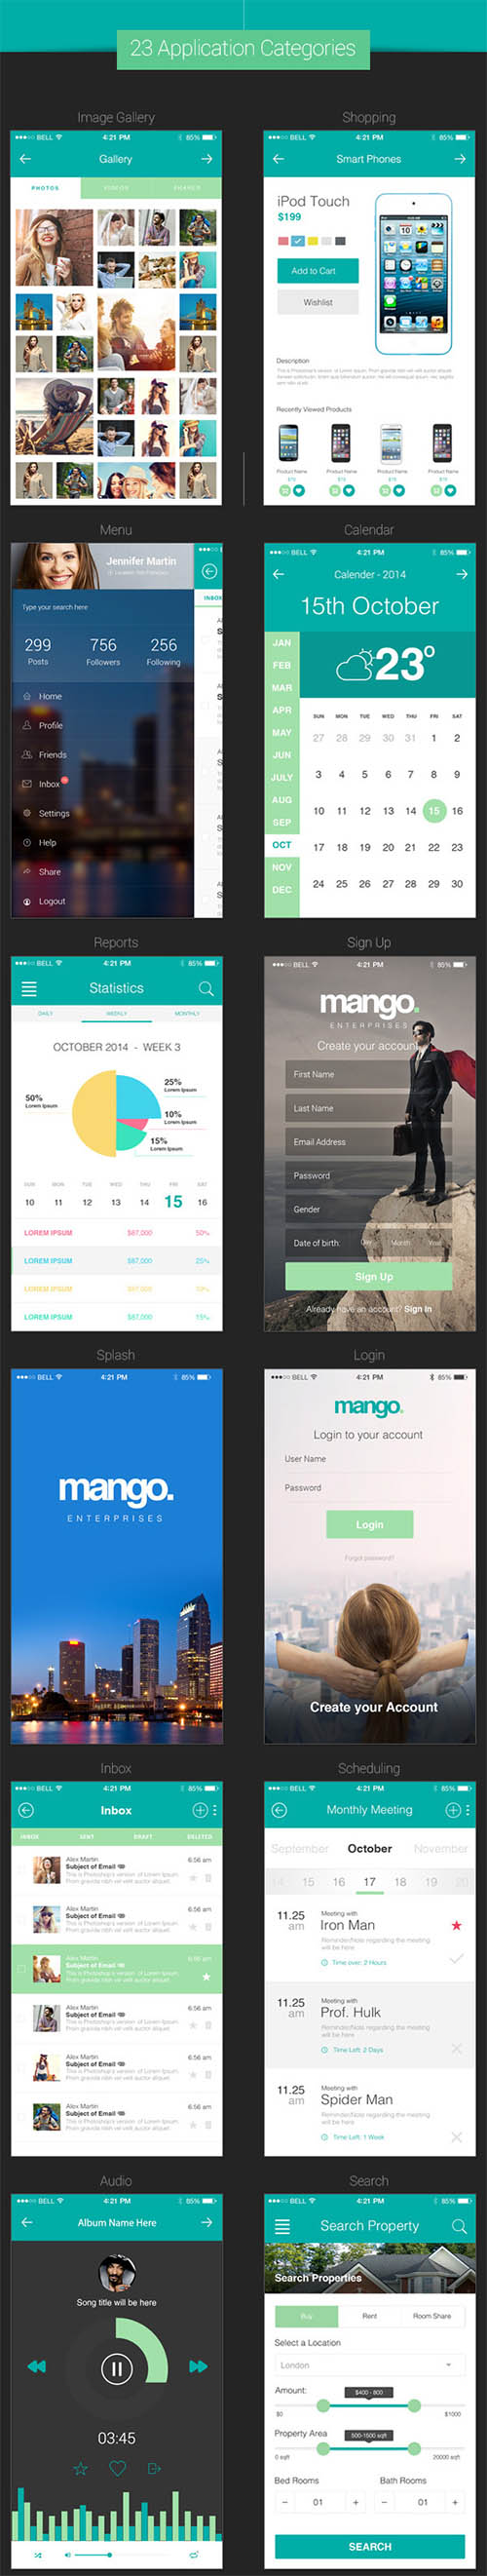 Mango iOS8 PSD UI Kit